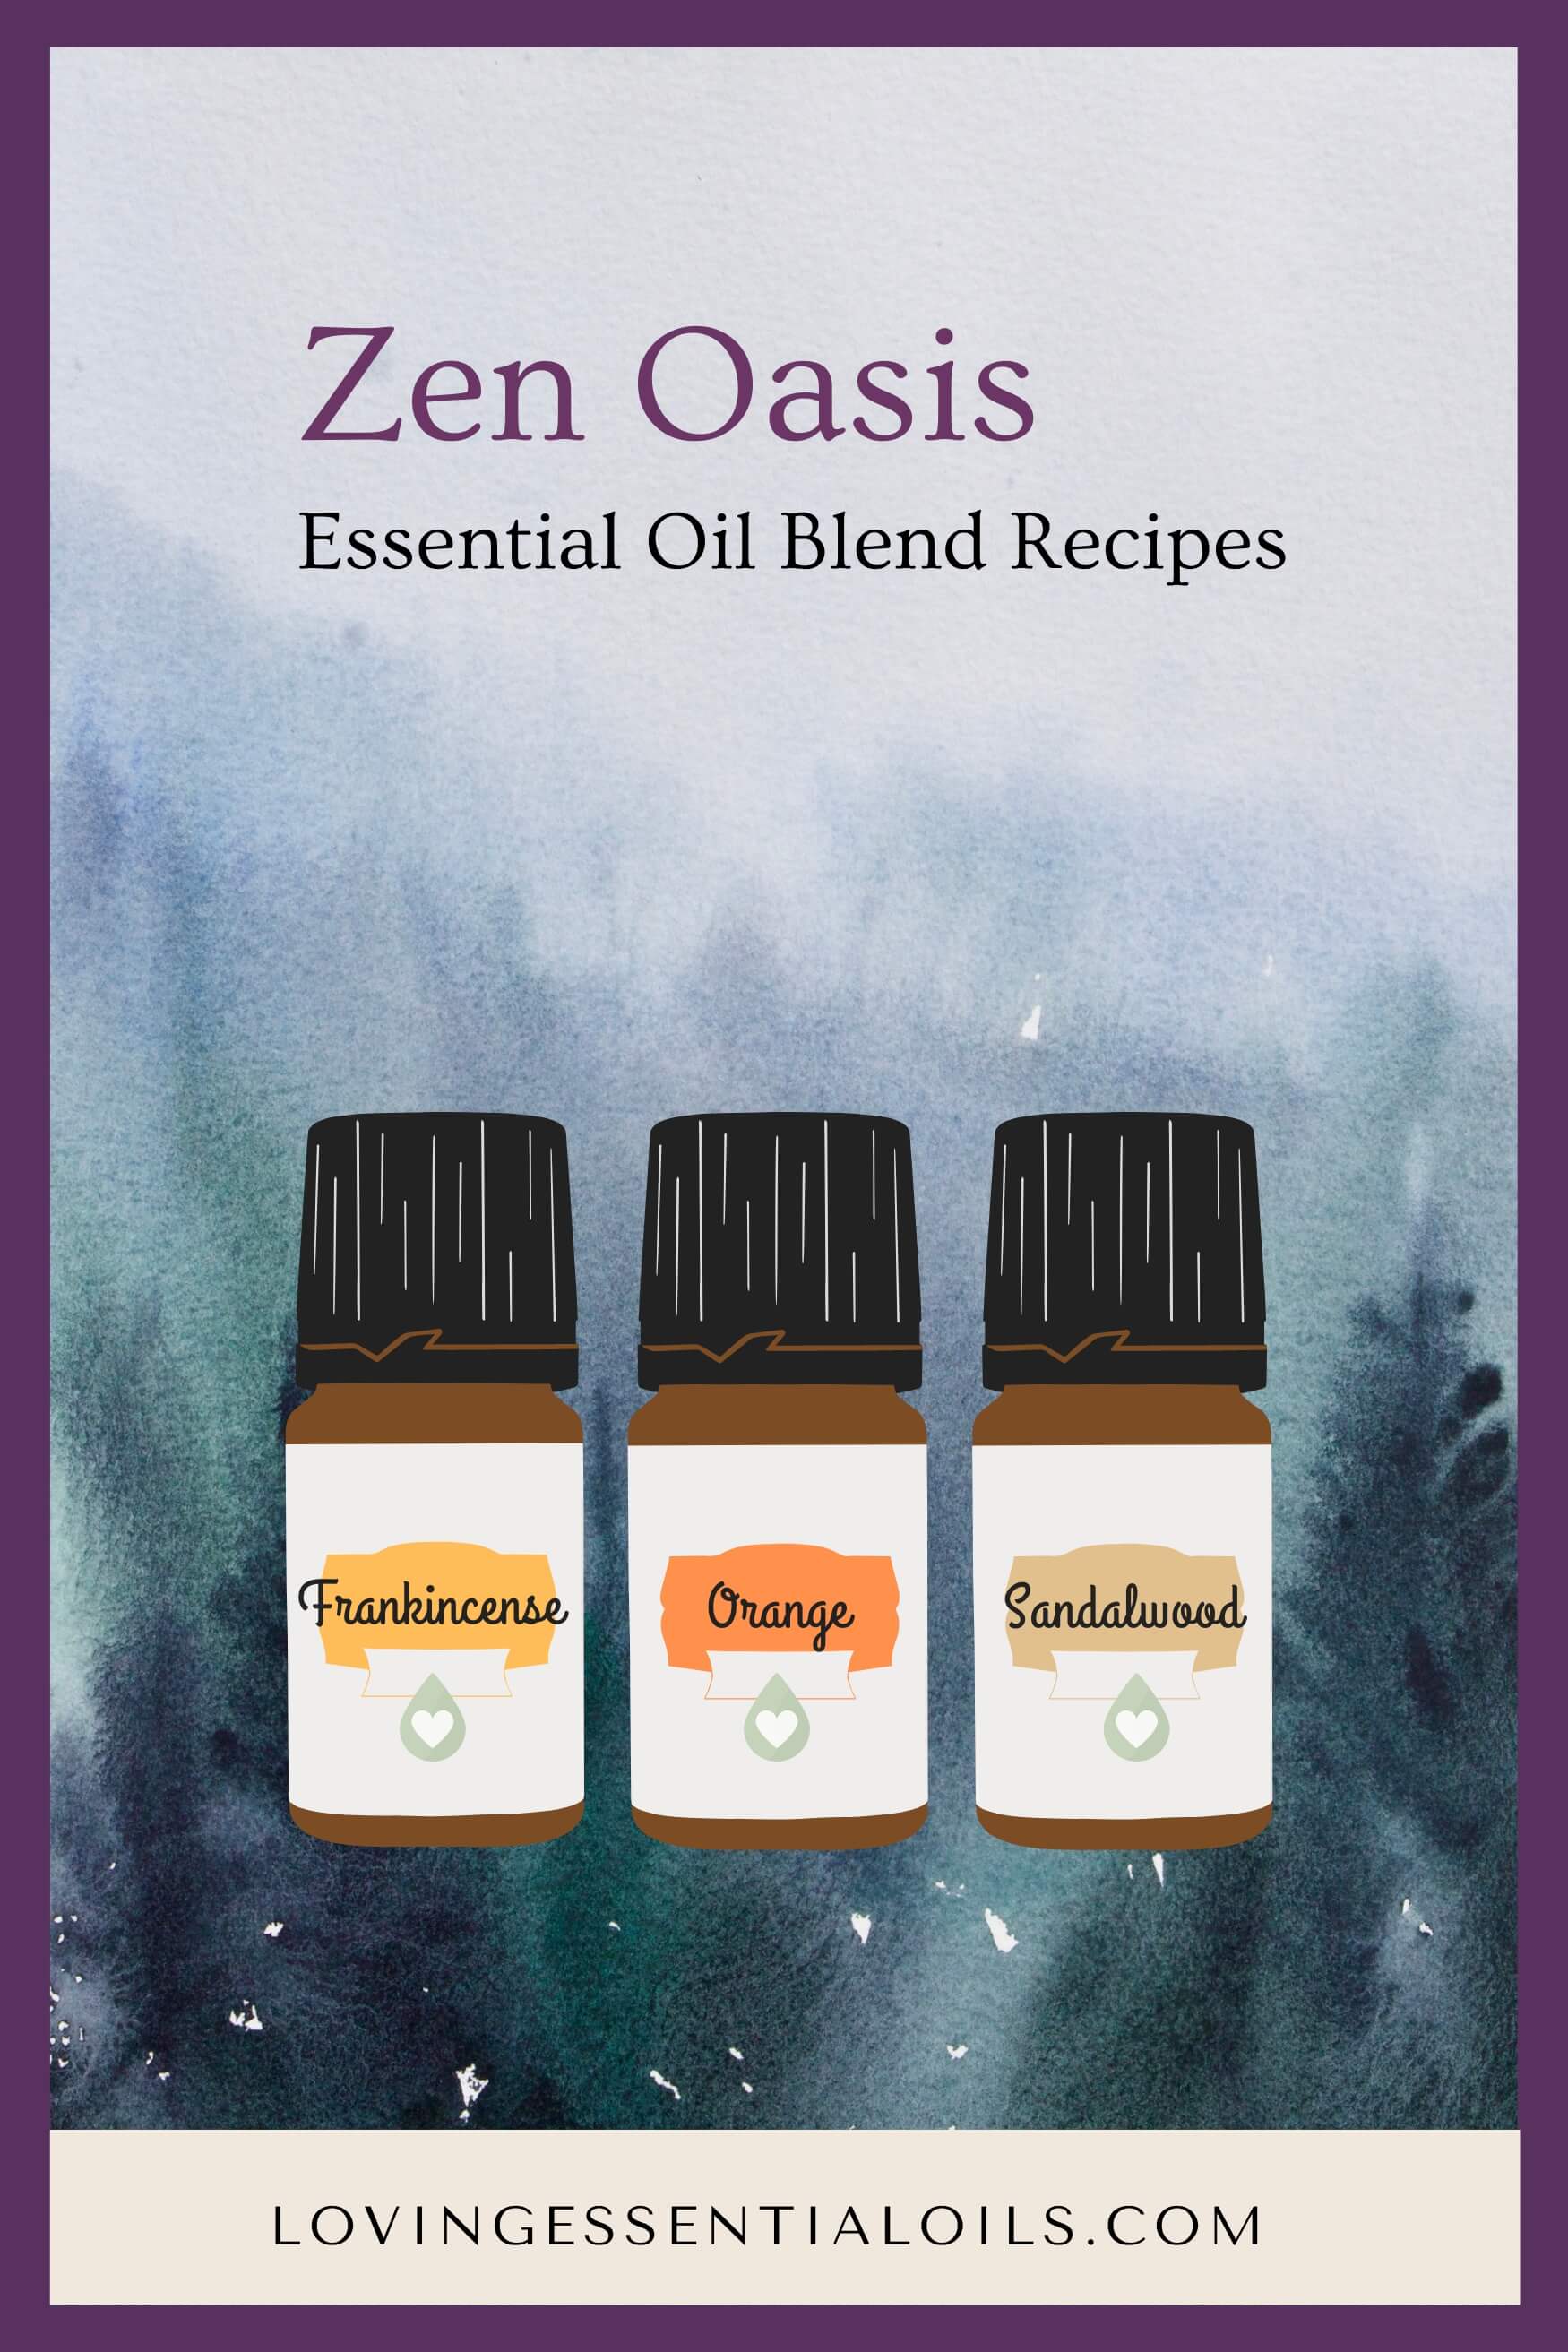 Zen Oasis essential oil blend recipes by Loving Essential Oils